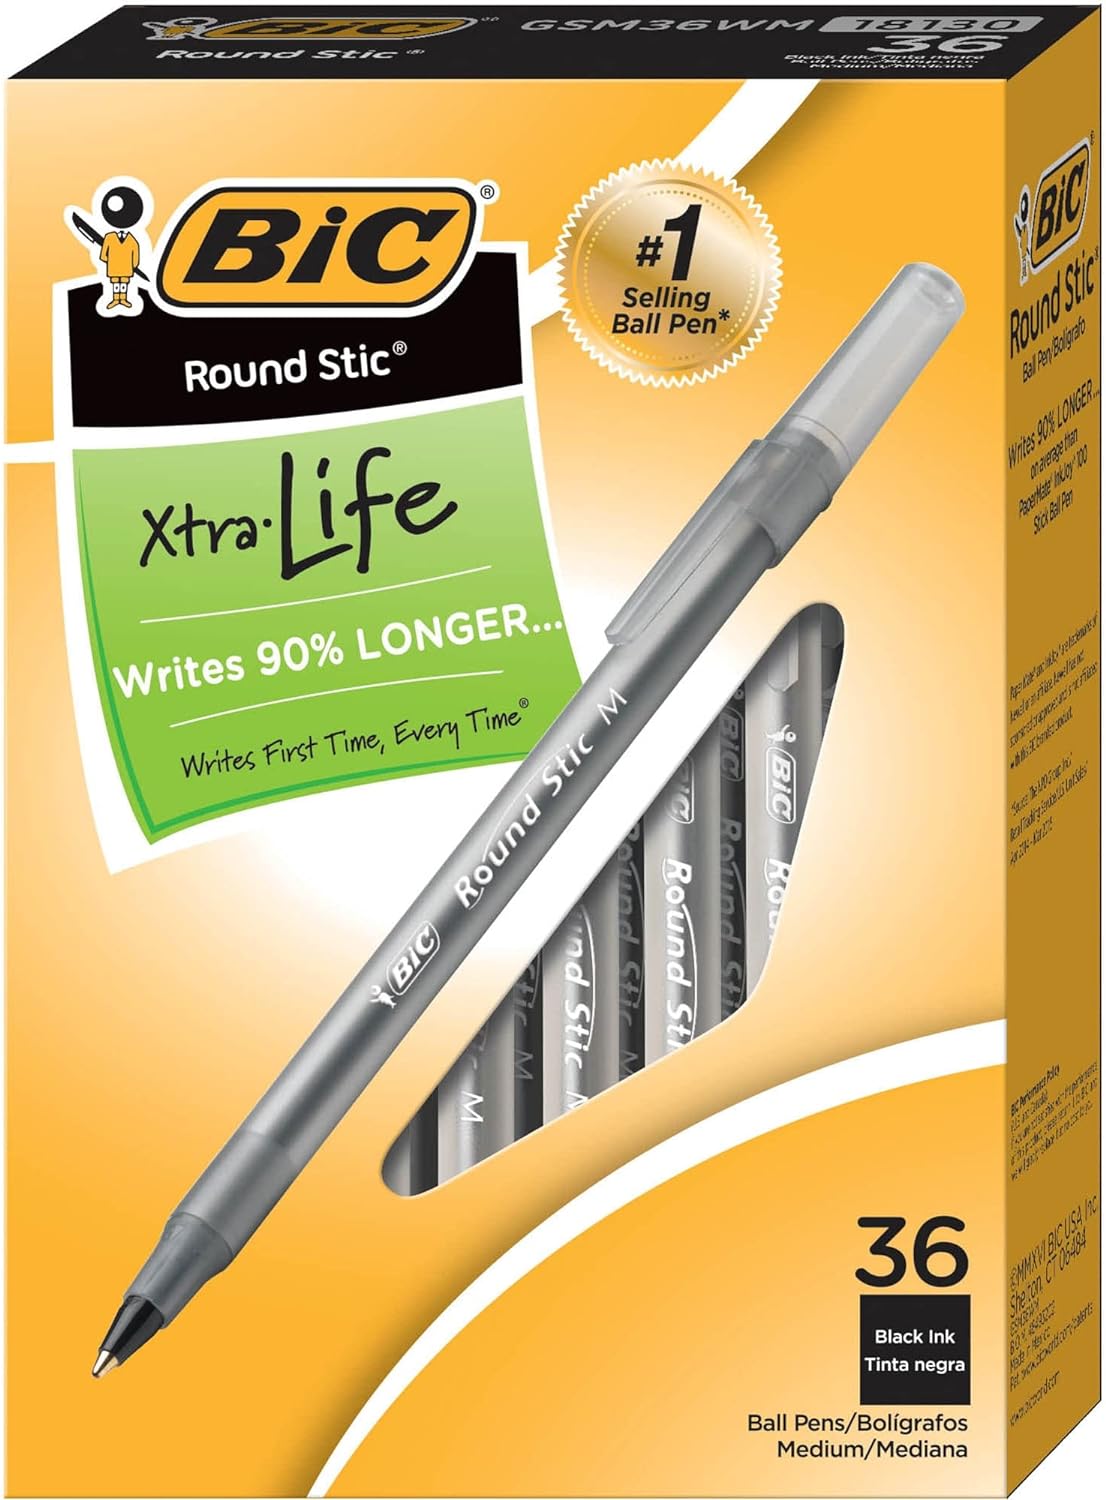 BICÂ® Round SticÂ® Xtra Life Ball Point Pen, Black, 36 Pack